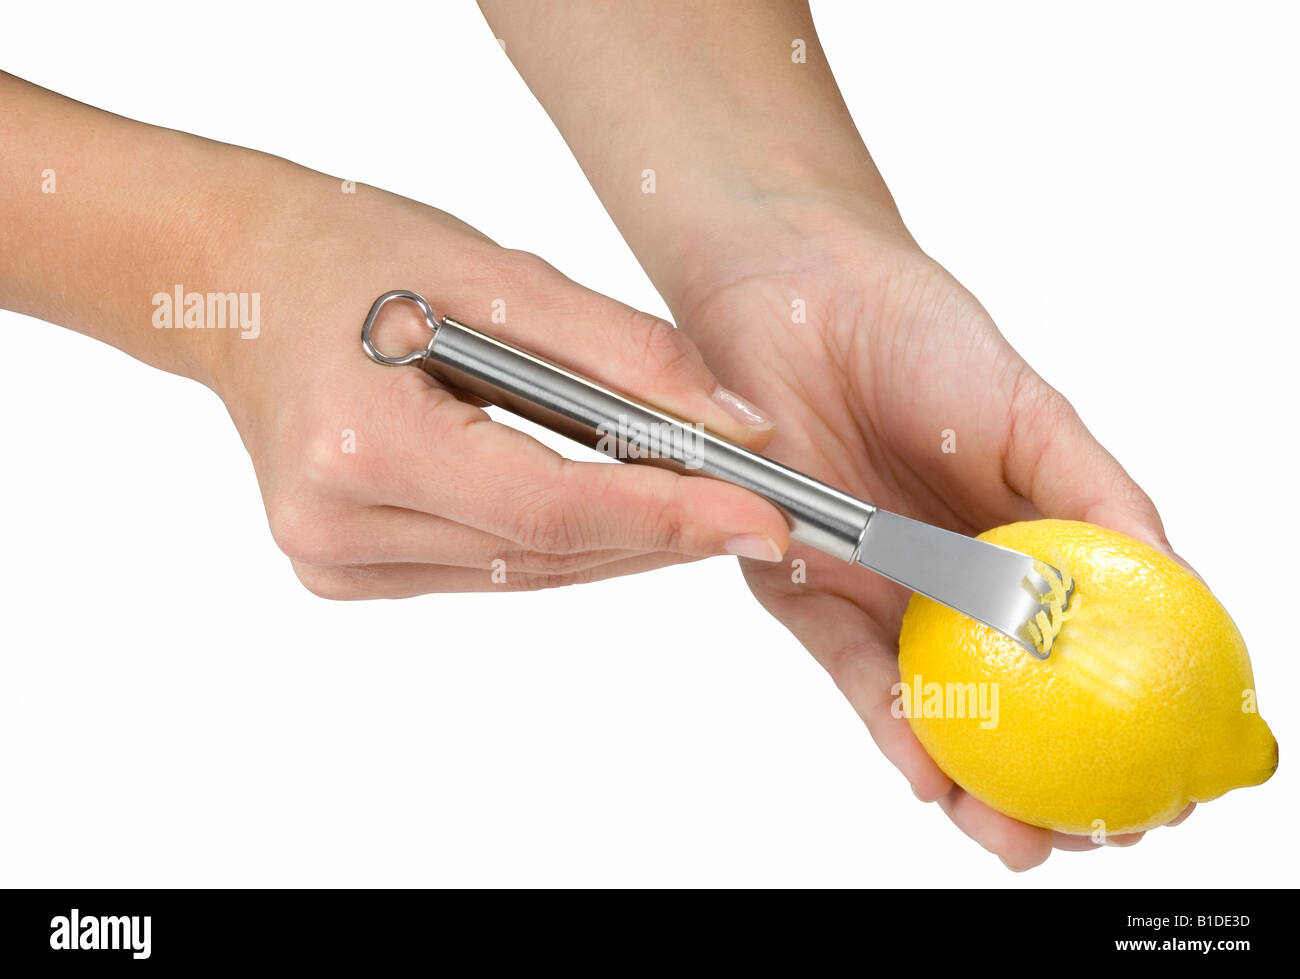 https://c8.alamy.com/comp/B1DE3D/hands-peeling-a-lemon-with-a-peeler-B1DE3D.jpg